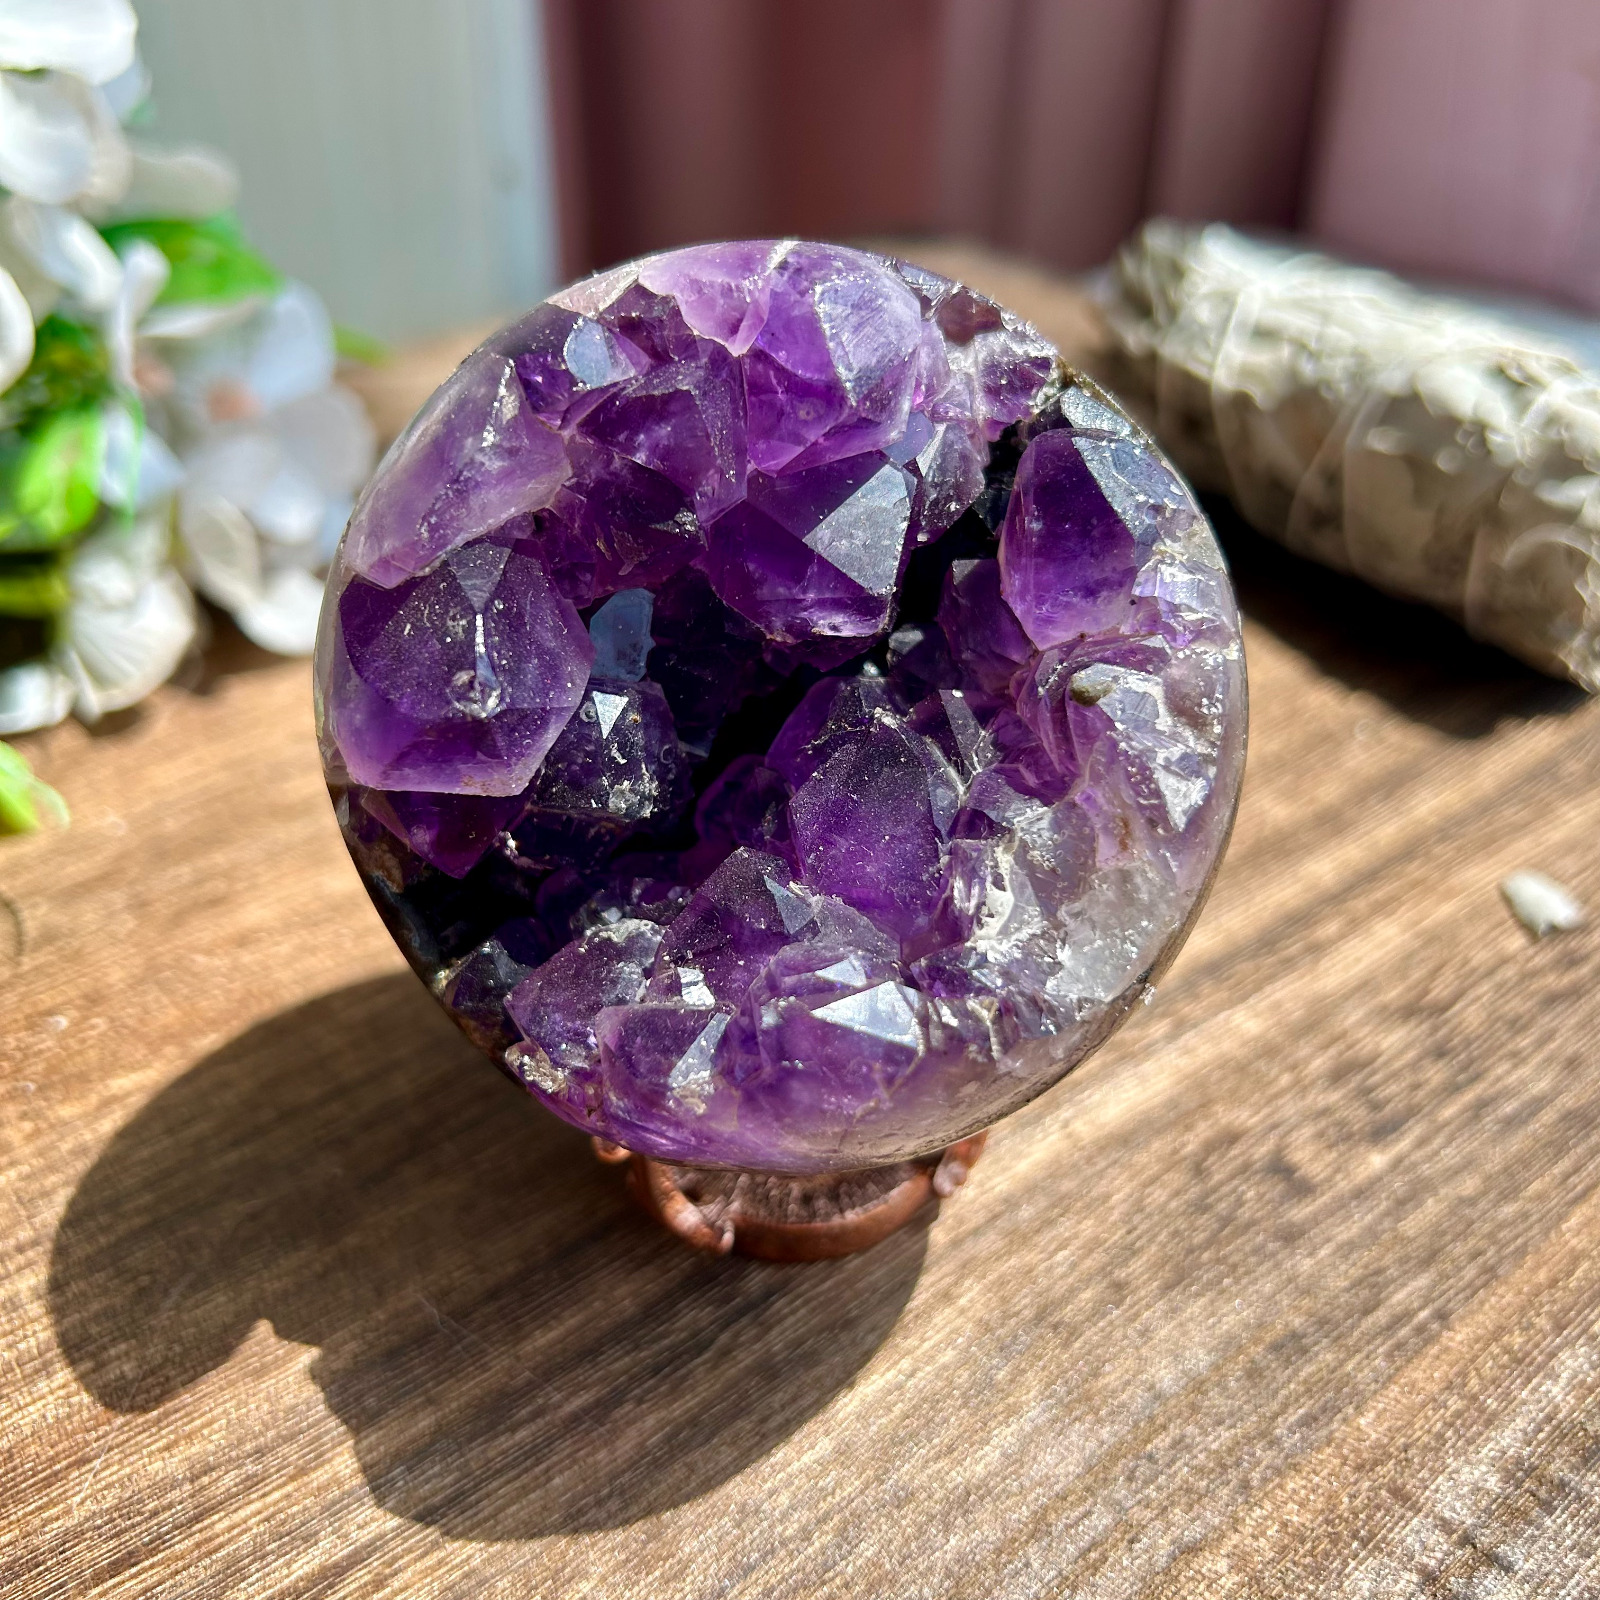 420g Natural Amethyst geode quartz crystal Start smiling sphere healing display